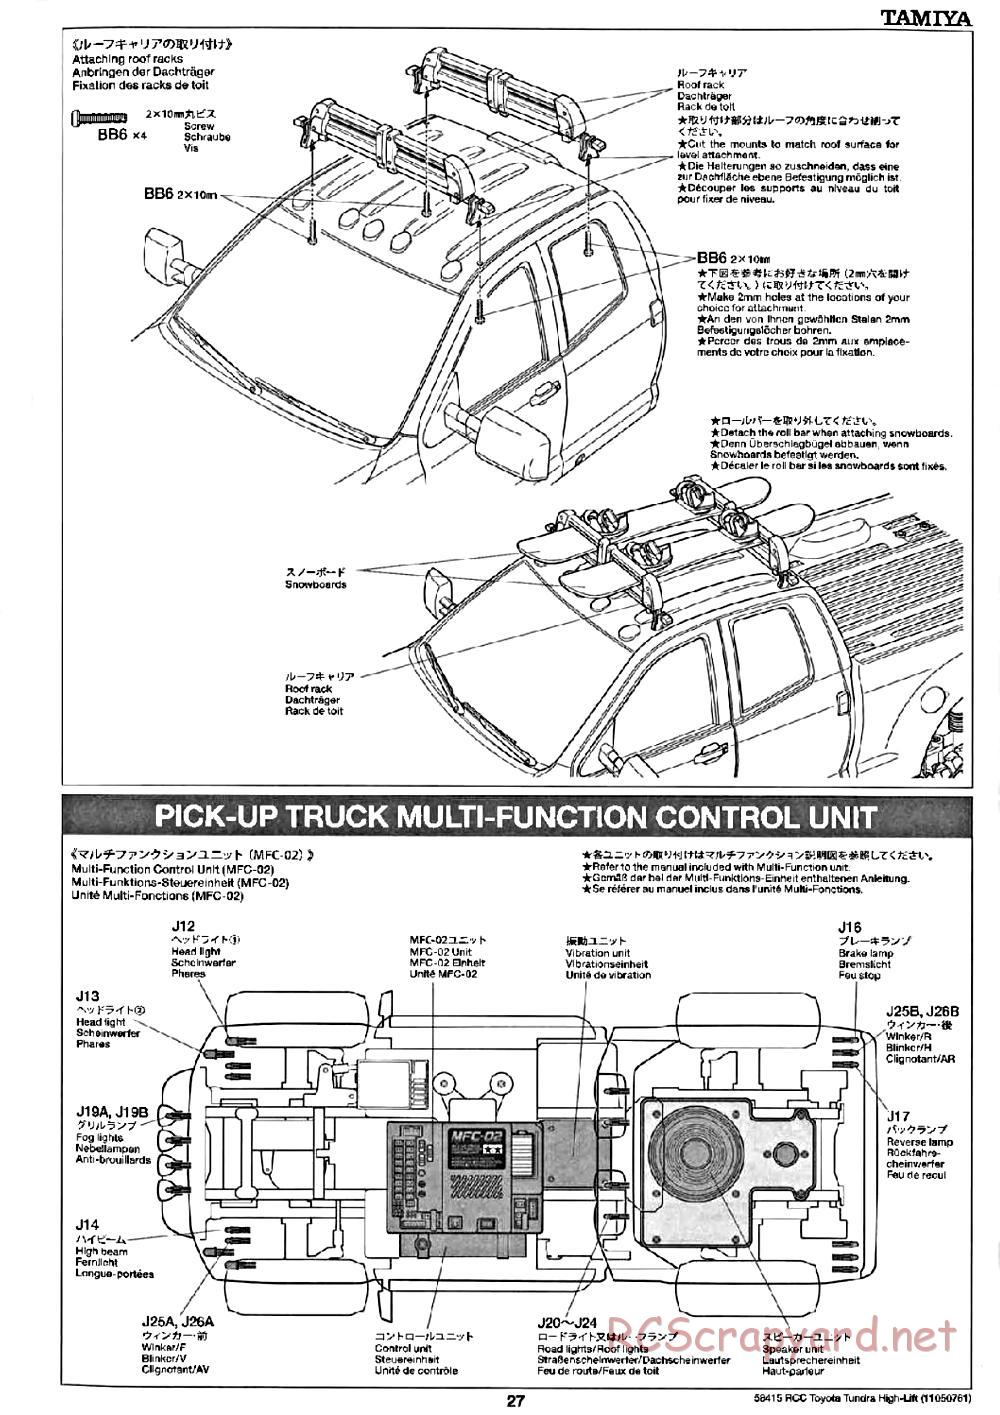 Tamiya - Toyota Tundra High-Lift Chassis - Manual - Page 27